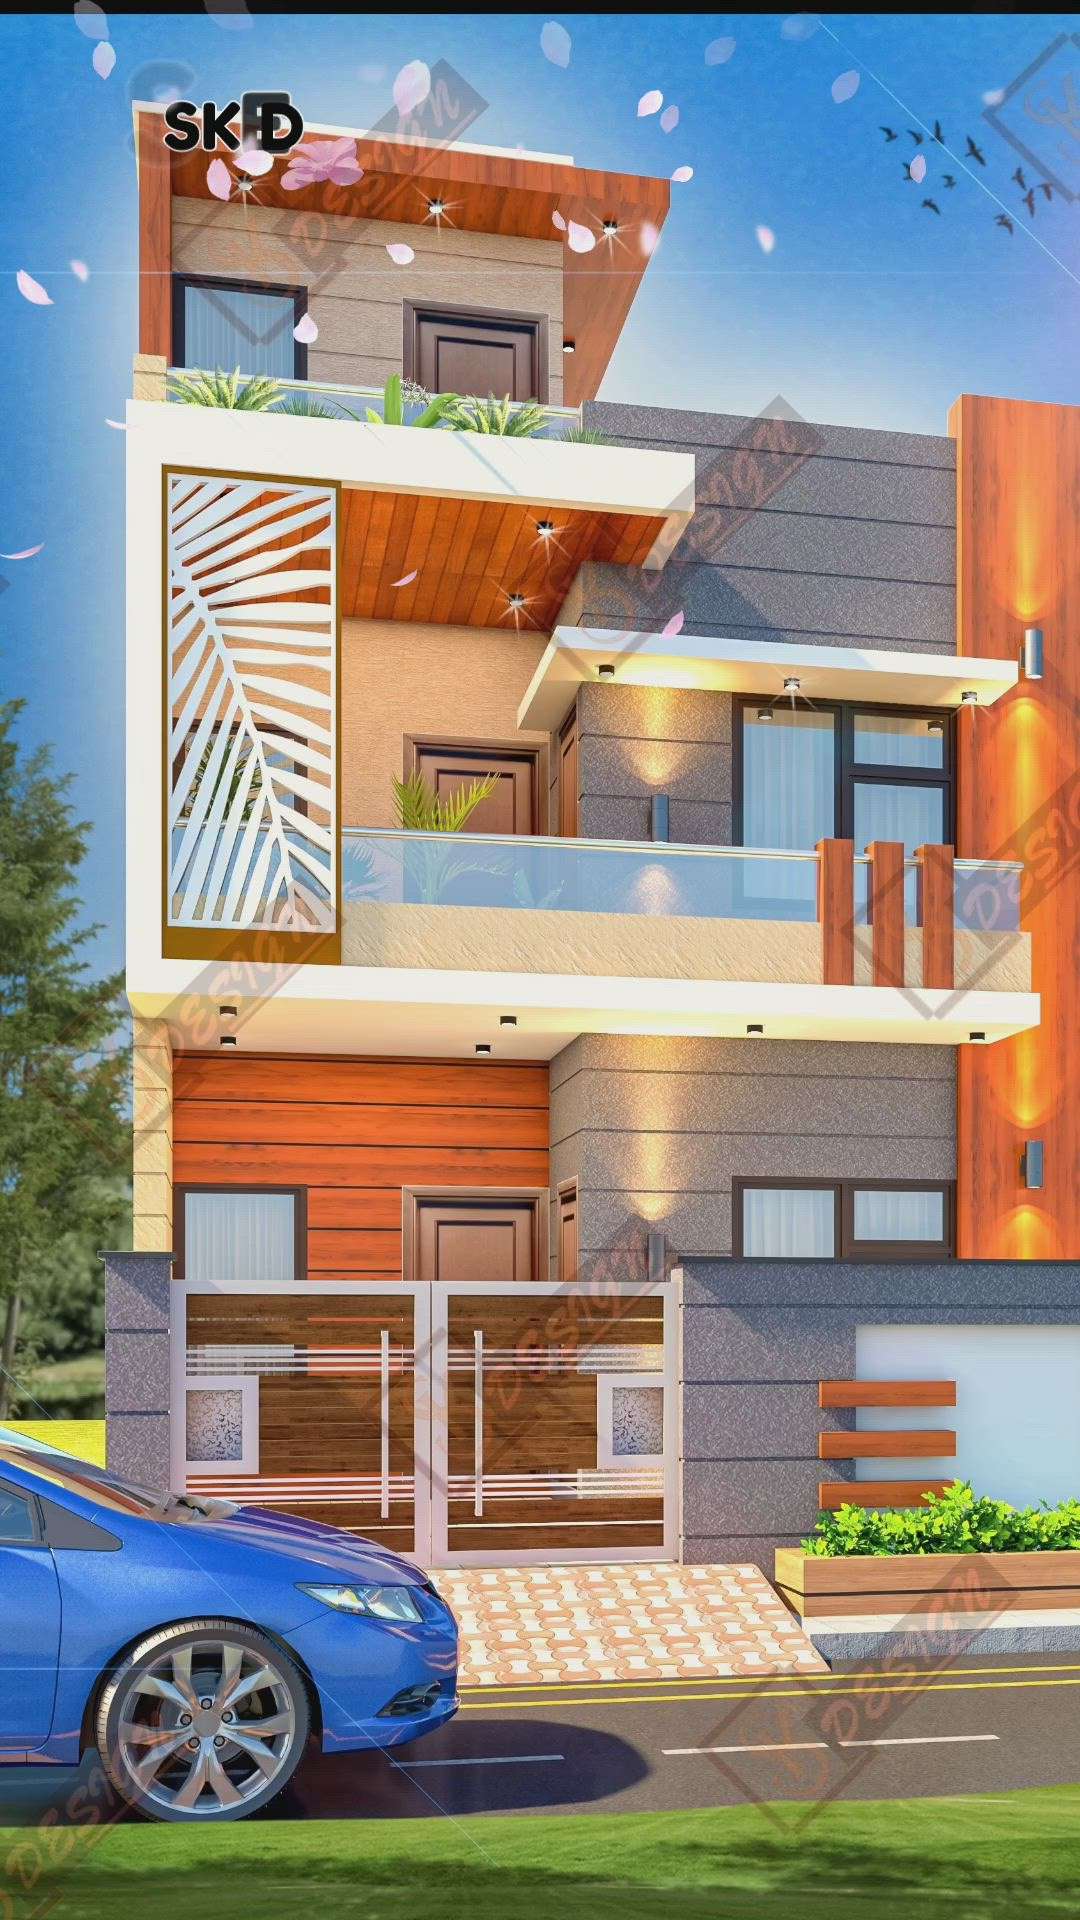 3d house design
#3dhousedesigns #HouseConstruction #ElevationHome #frontElevation #koloapp